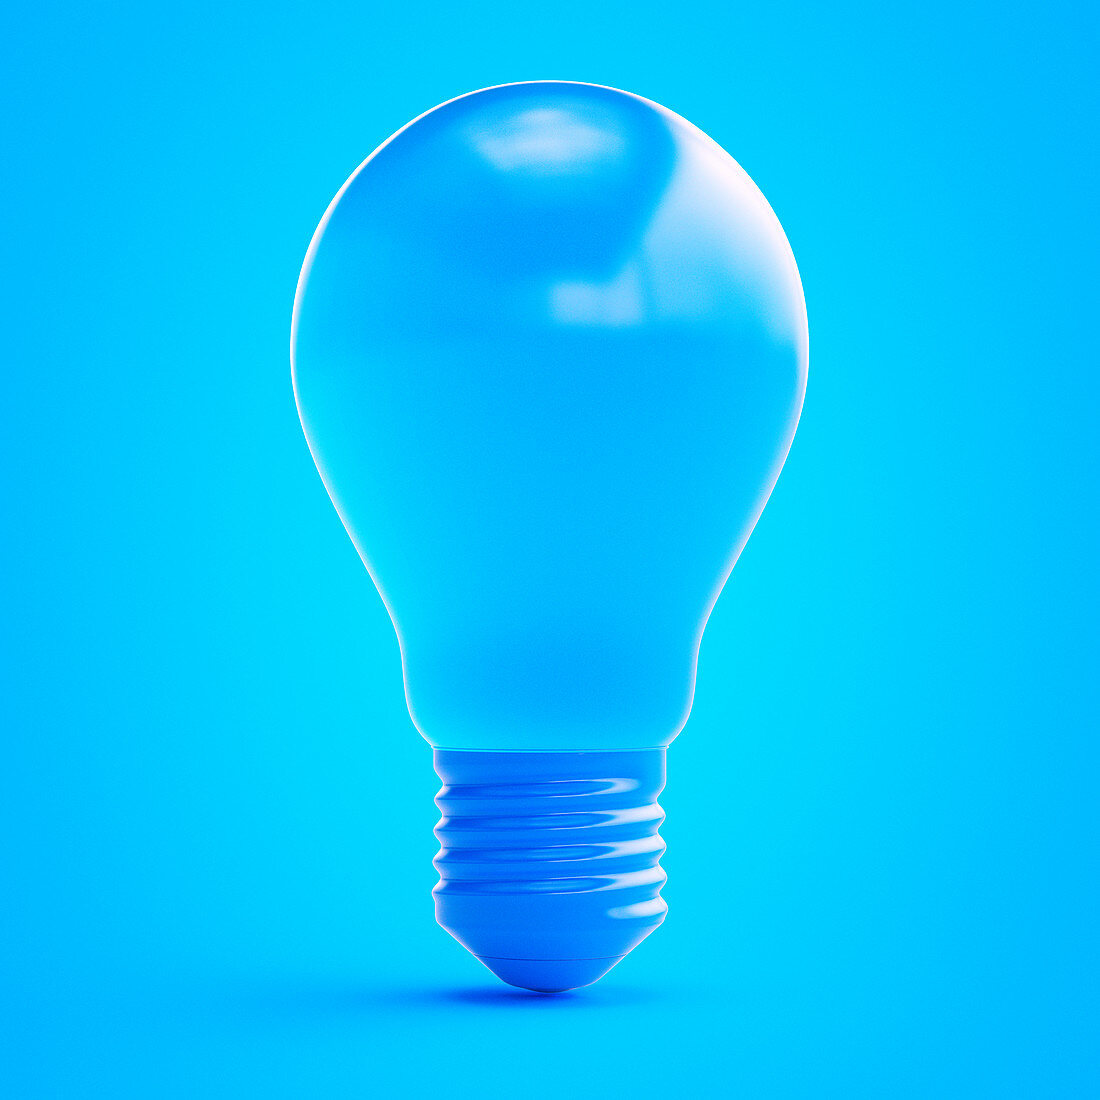 Illustration of a blue light bulb